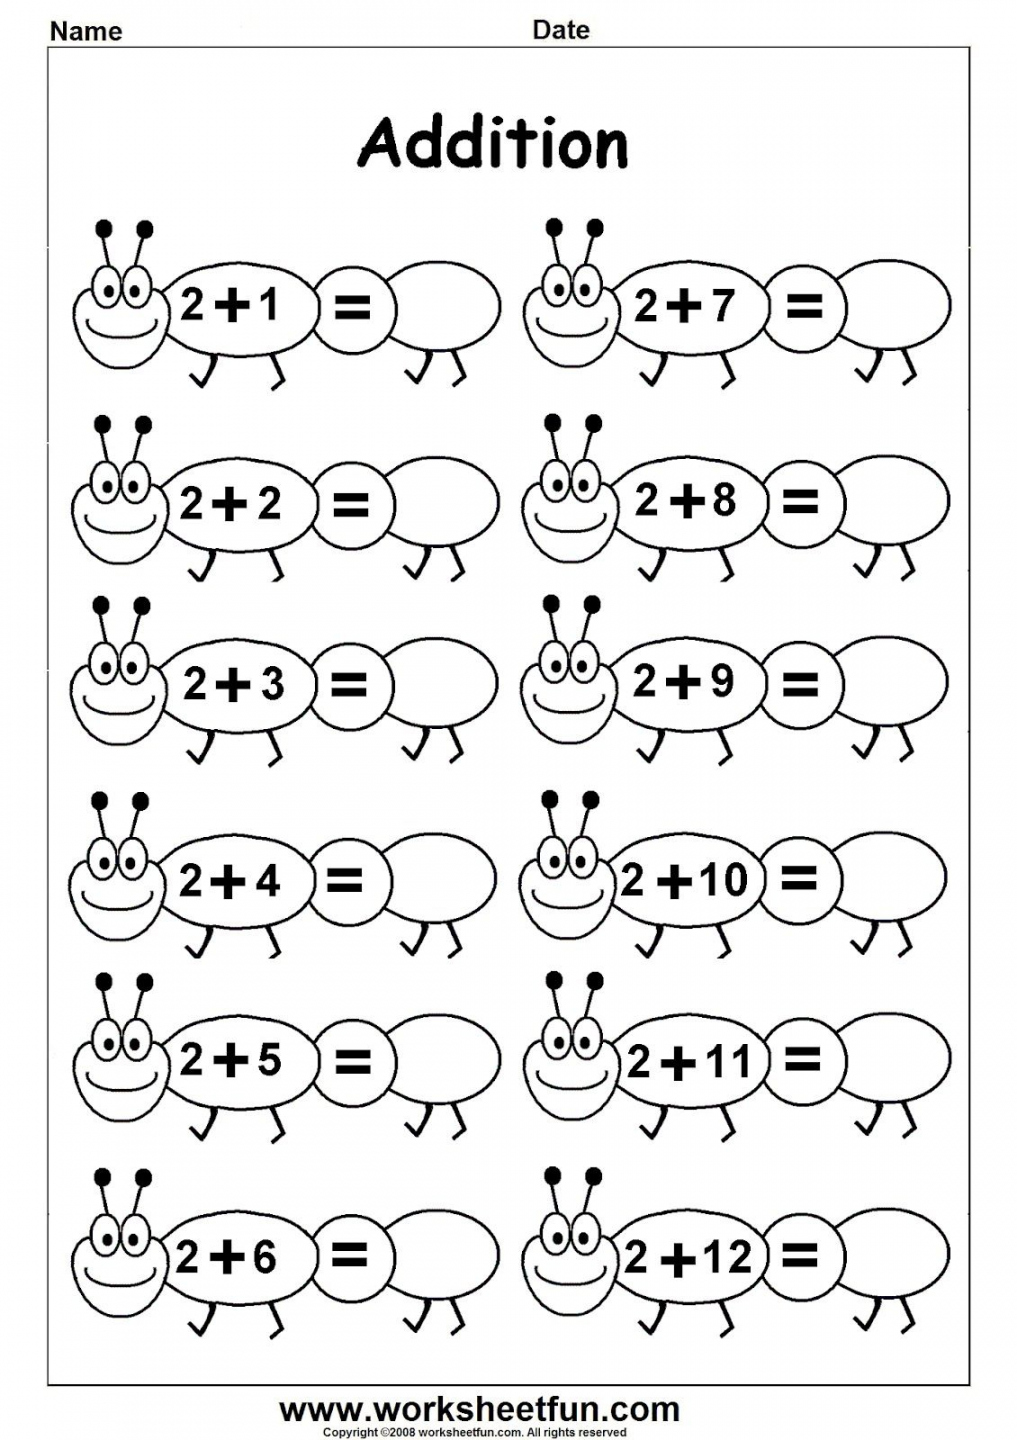 Free Printable Math Worksheets For Kindergarten - Printable - Worksheetfun - FREE PRINTABLE WORKSHEETS  st grade math